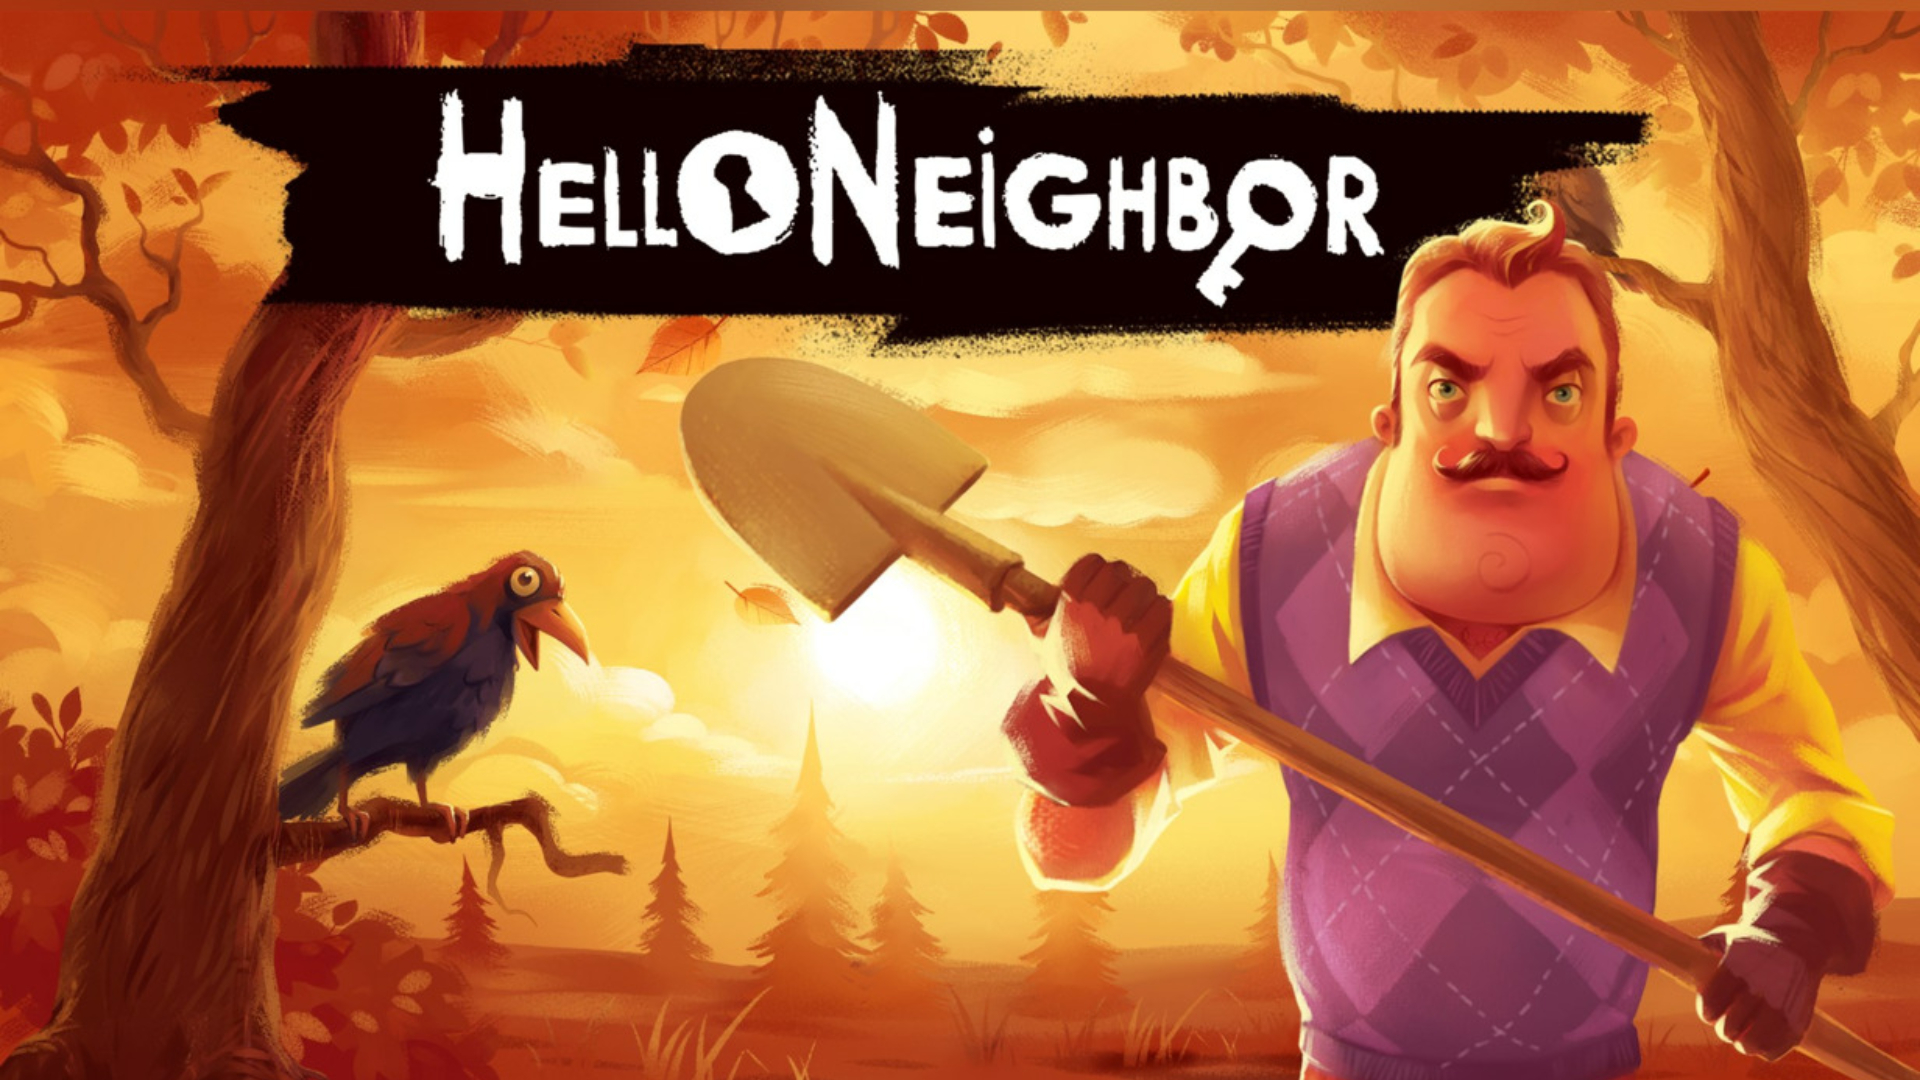 Top 5 Best Games Like Hello Neighbor on Mobile